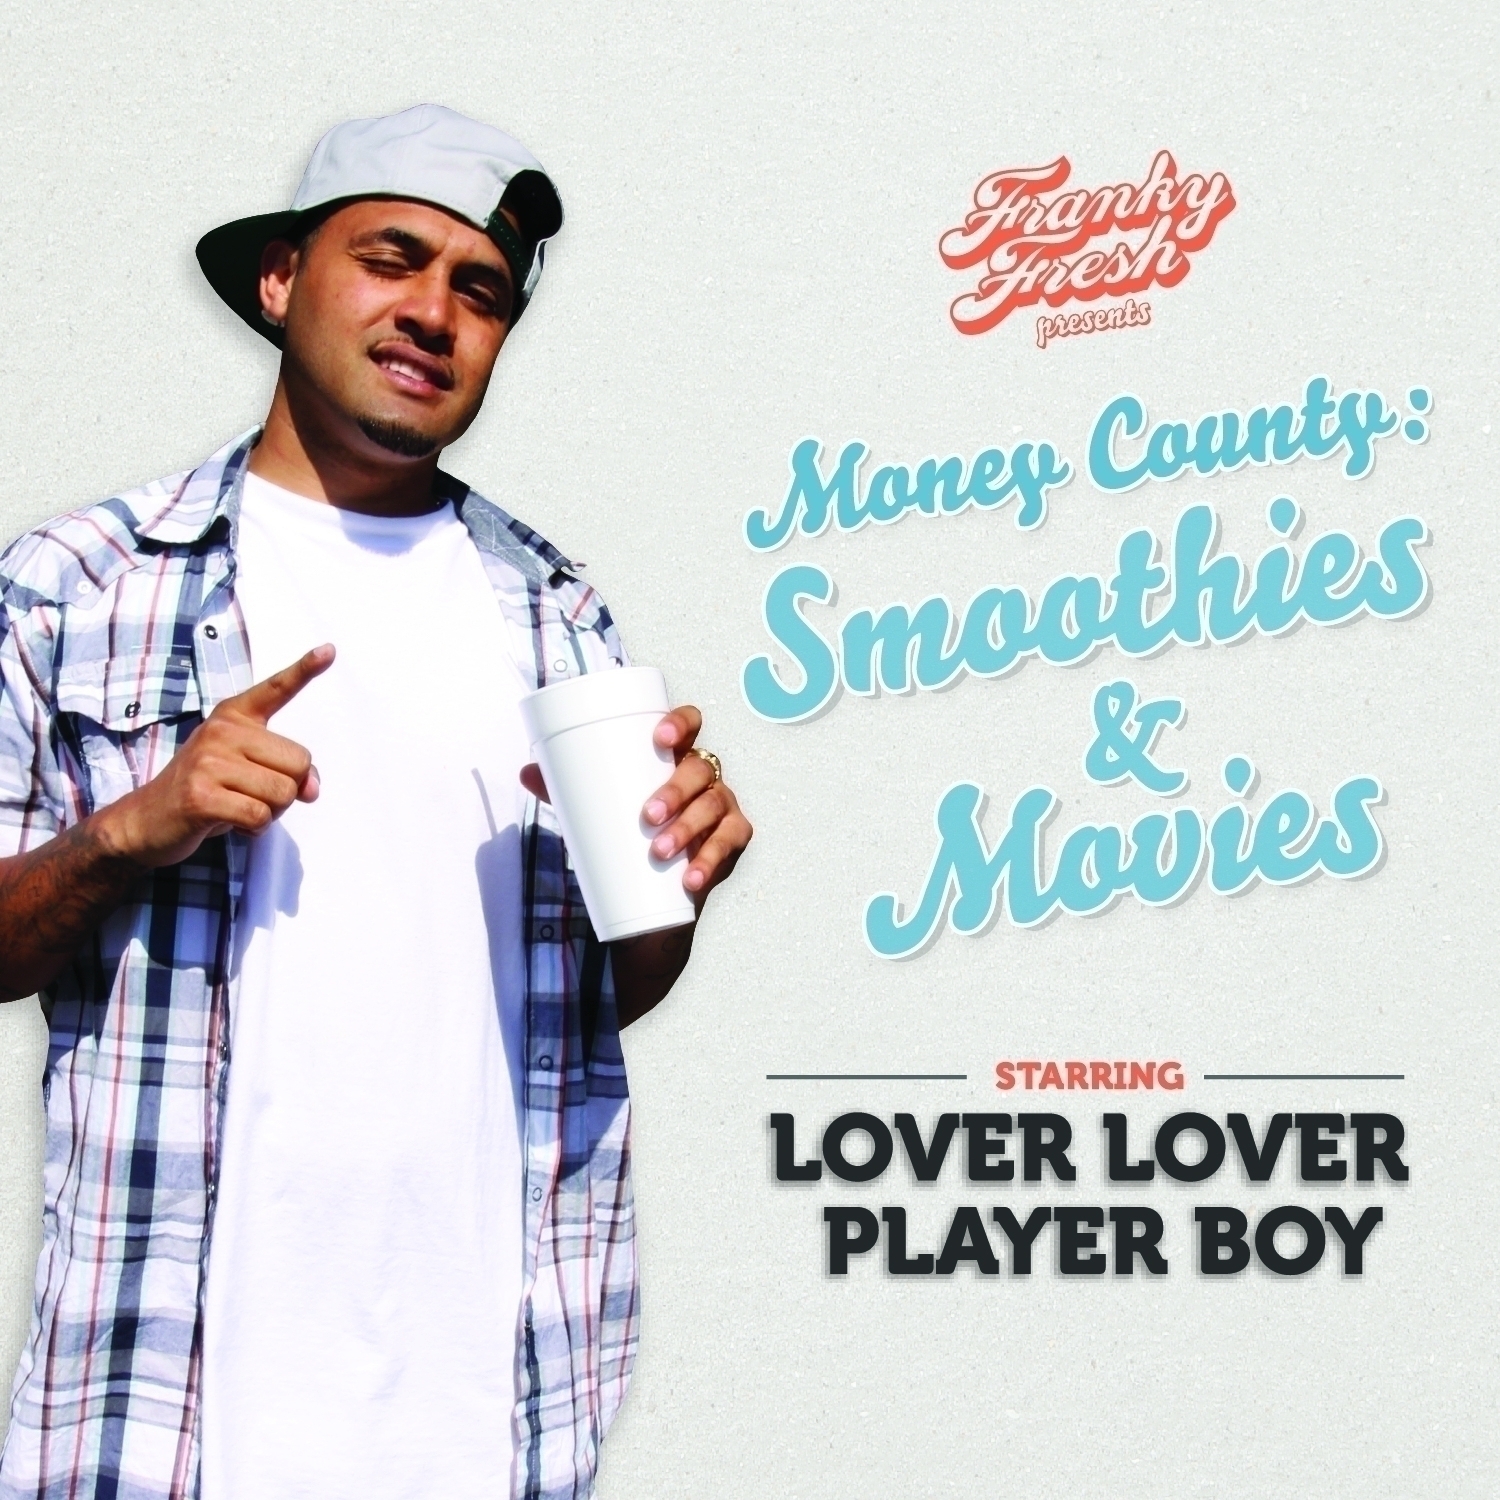 Money County: Smoothies & Movies